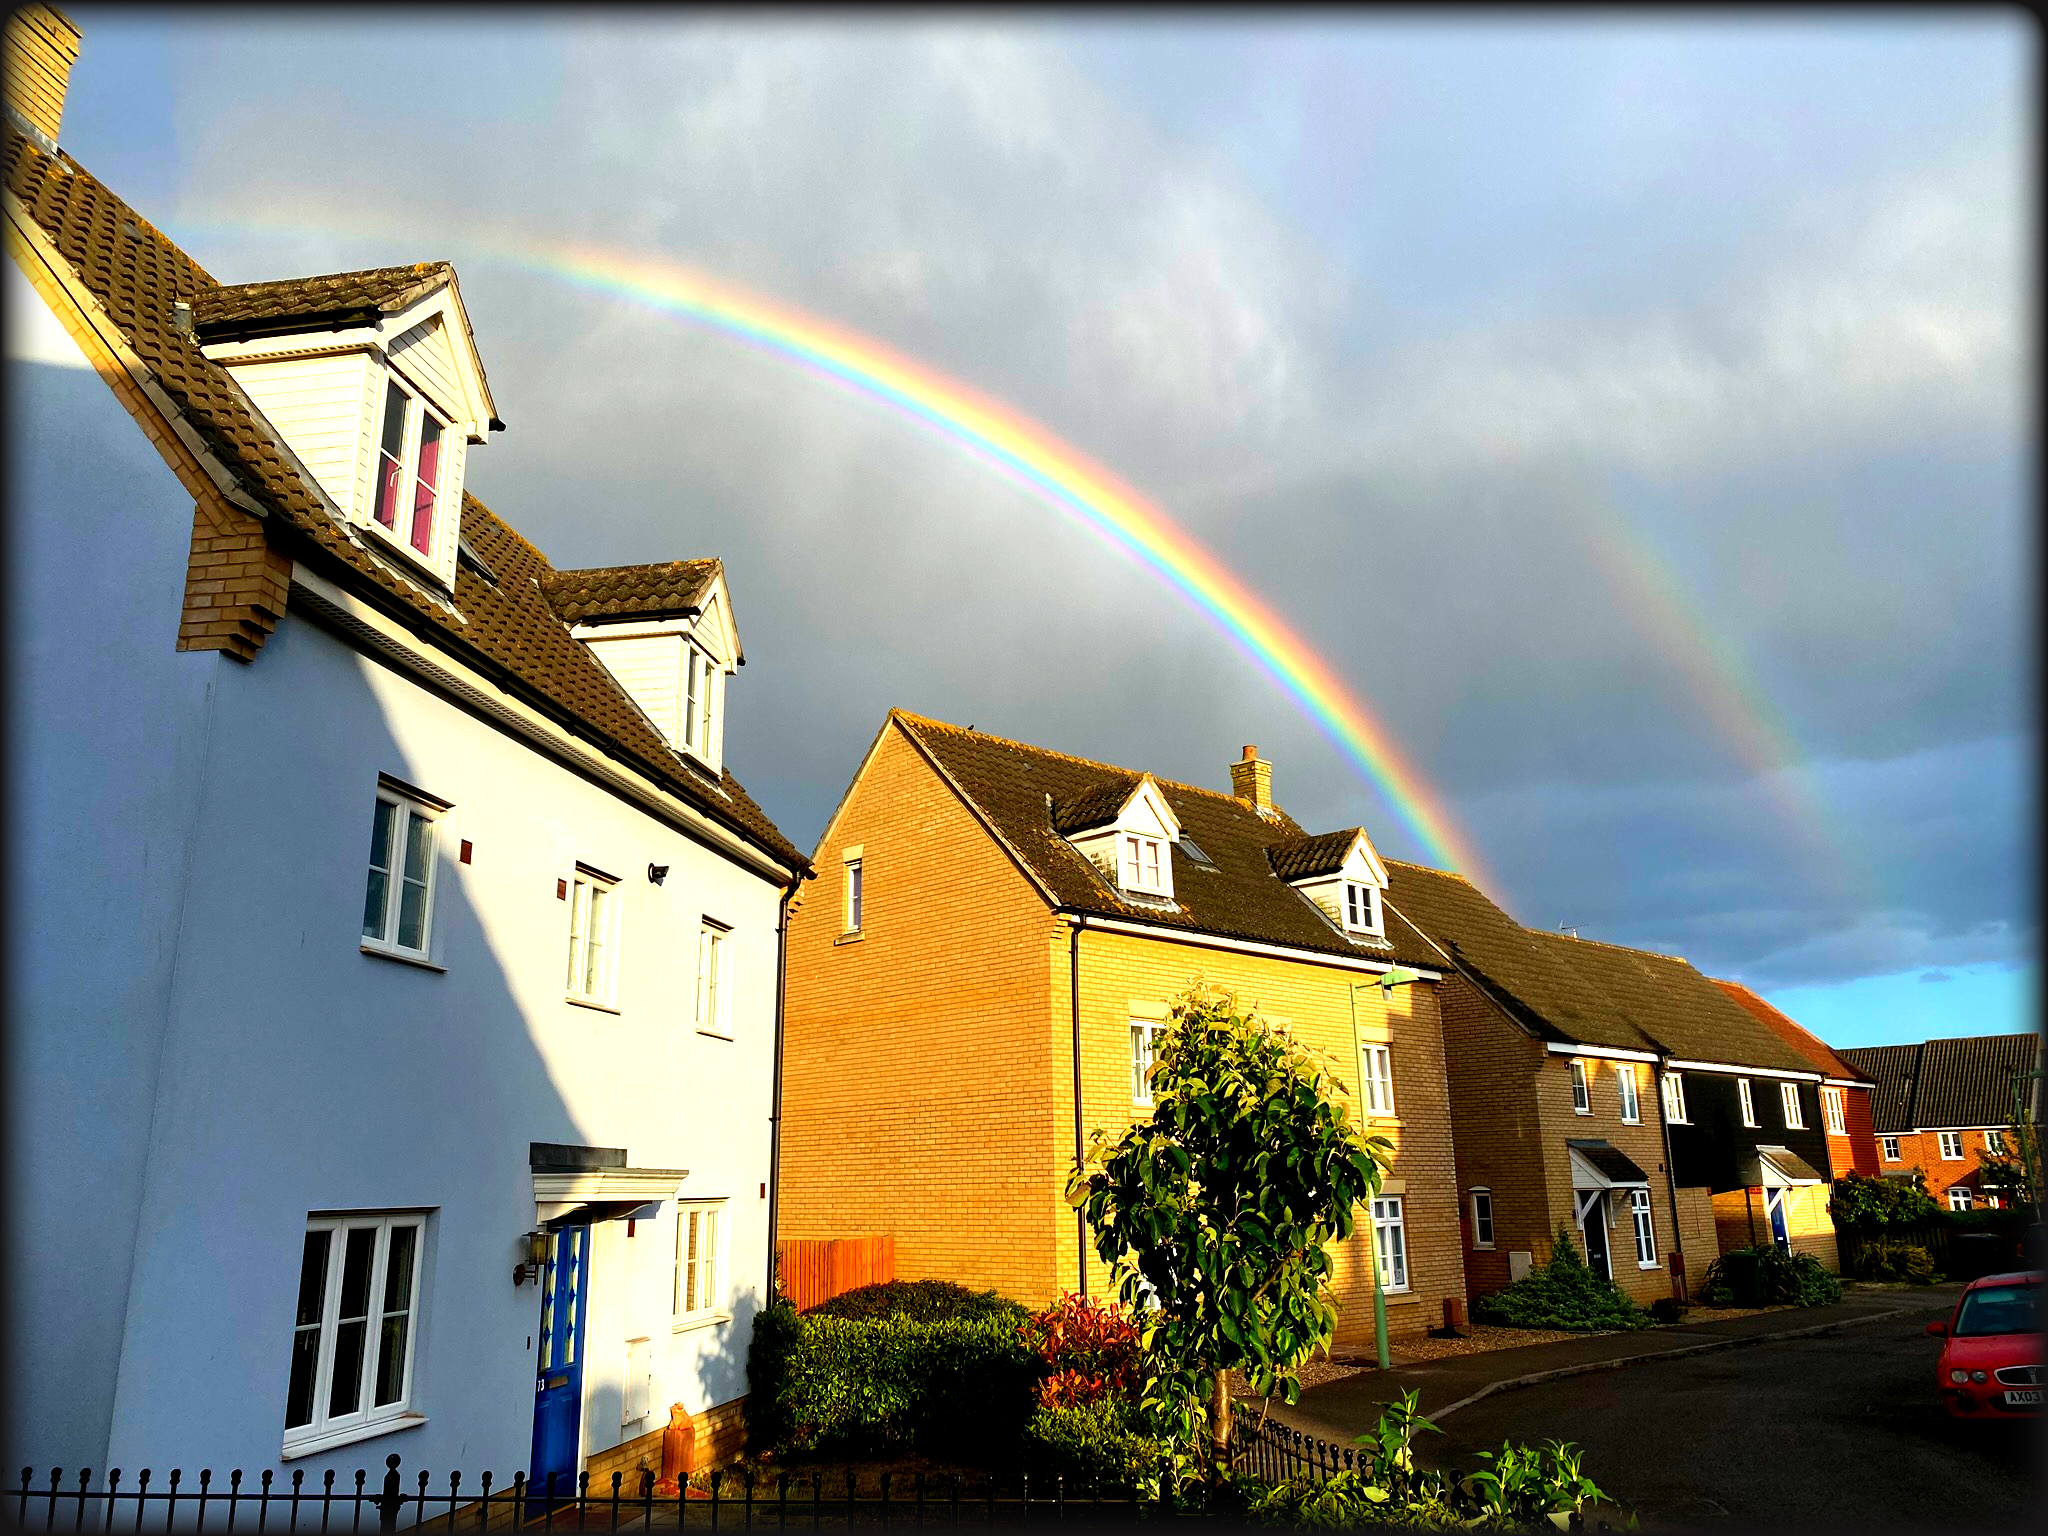 General 2048x1536 nature landscape house clouds UK rainbows sunlight window car sky architecture door